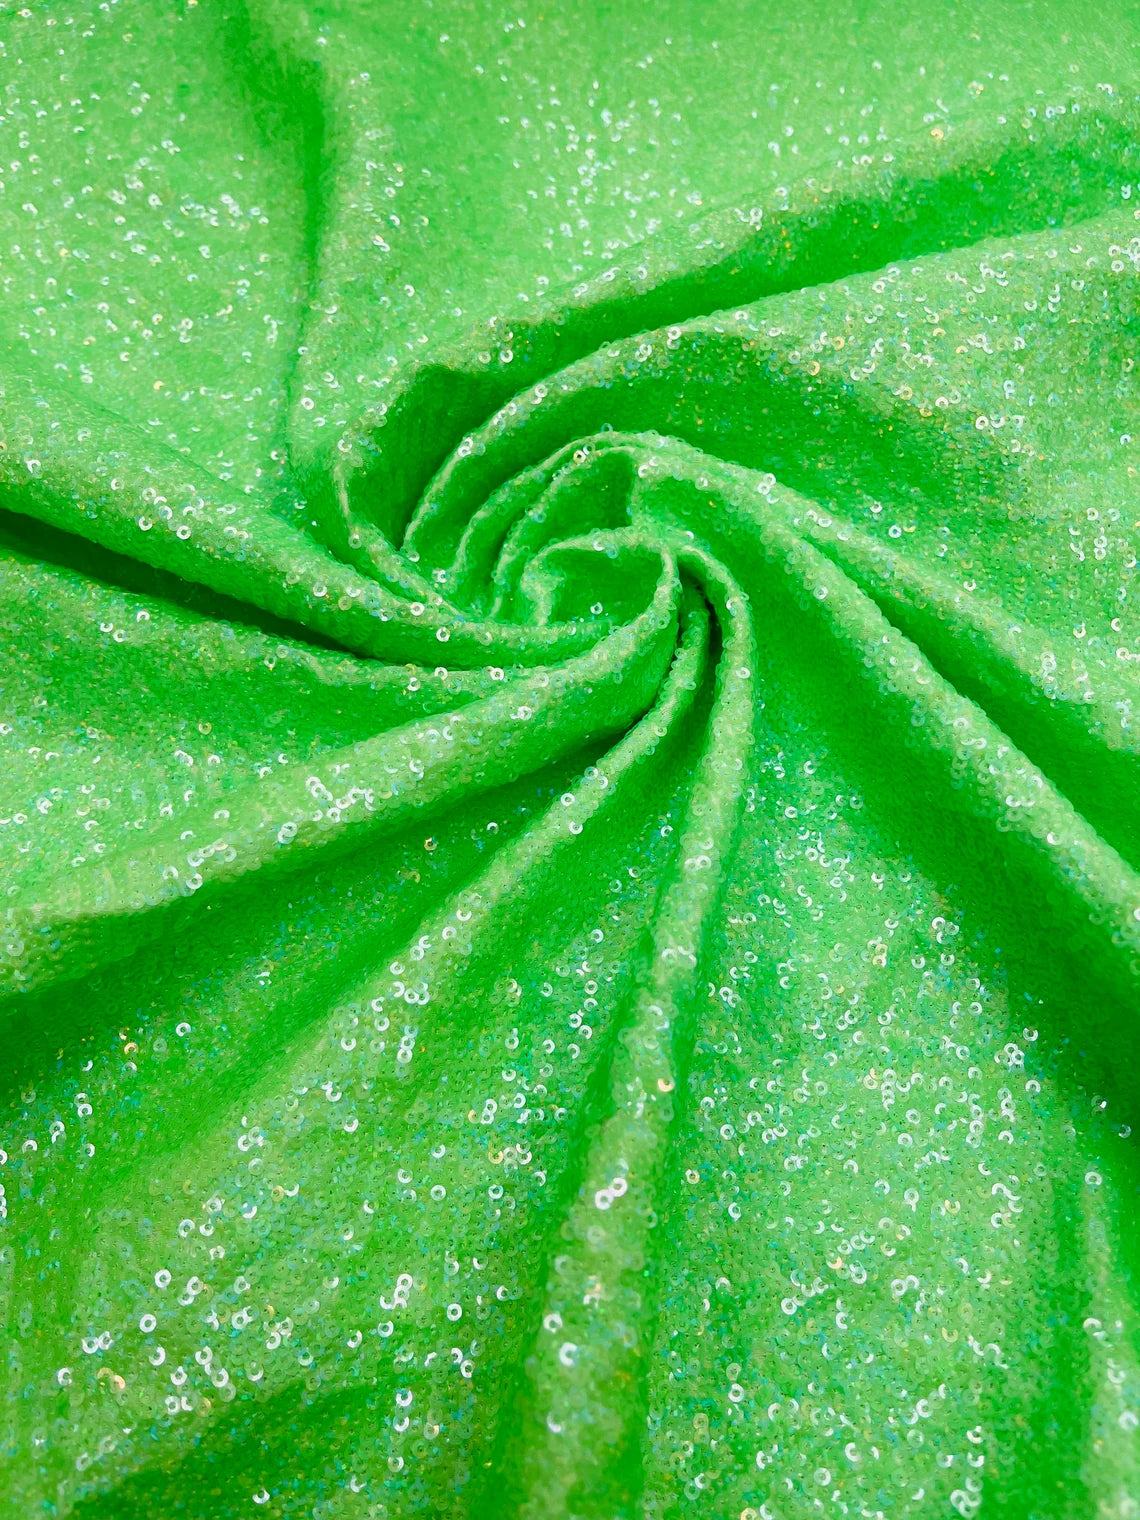 Mini Glitz Sequins on Milliskin - Lime Green Holographic - 4 Way Stretch Milliskin Stretch Spandex Fabric by Yard